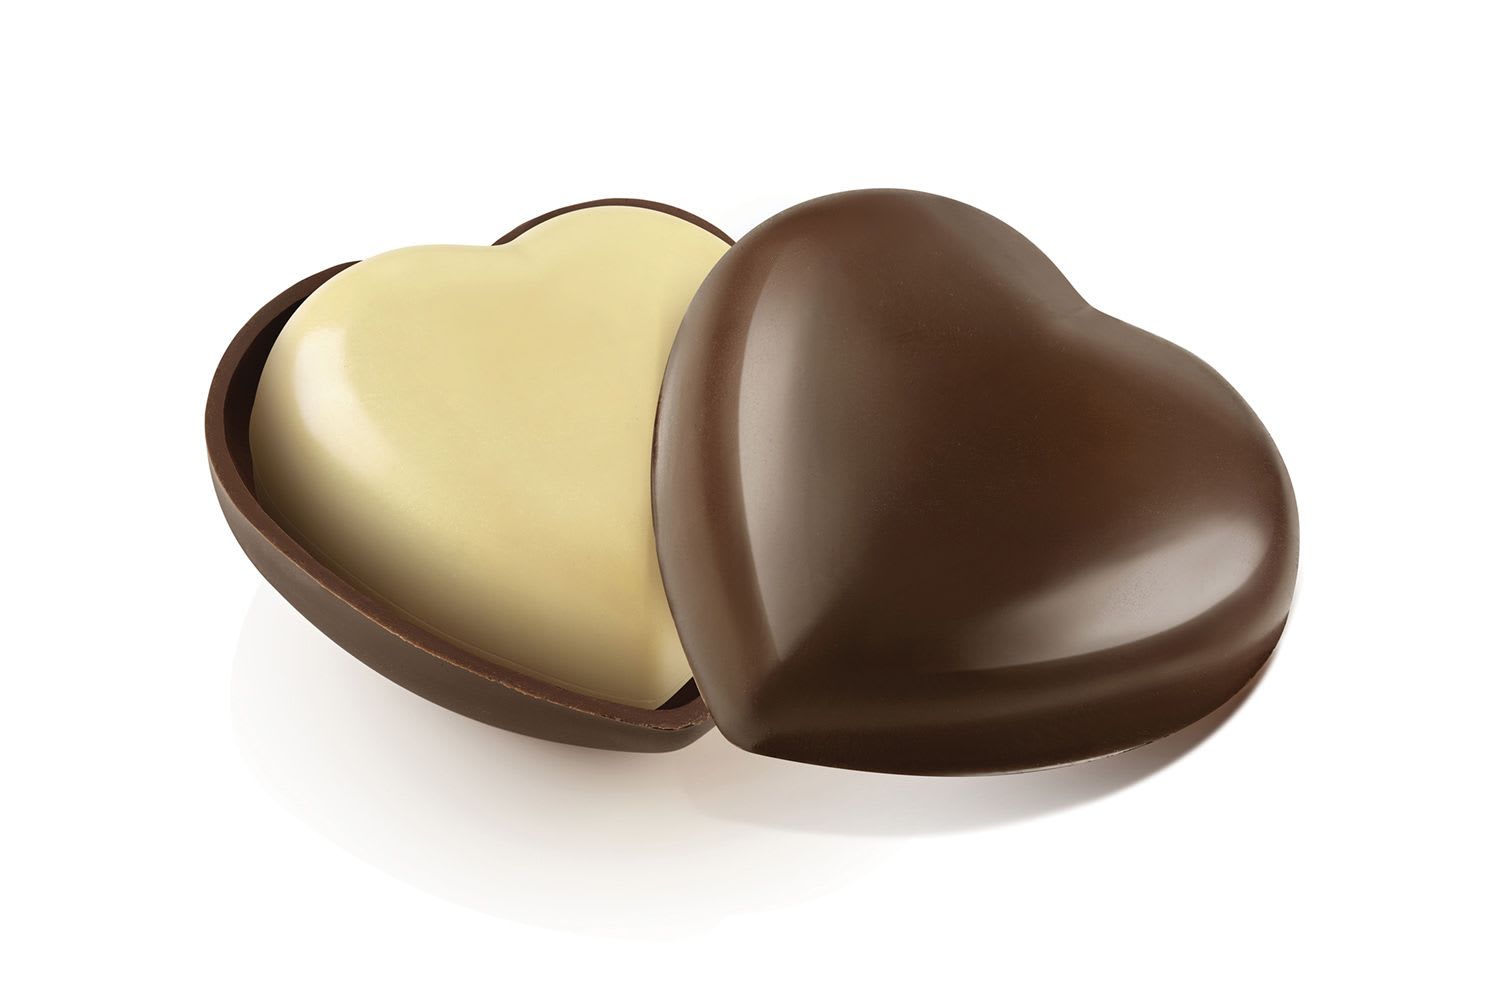 Silikomart 'Easy Choc' Silicone Chocolate Mold, Choco Flame